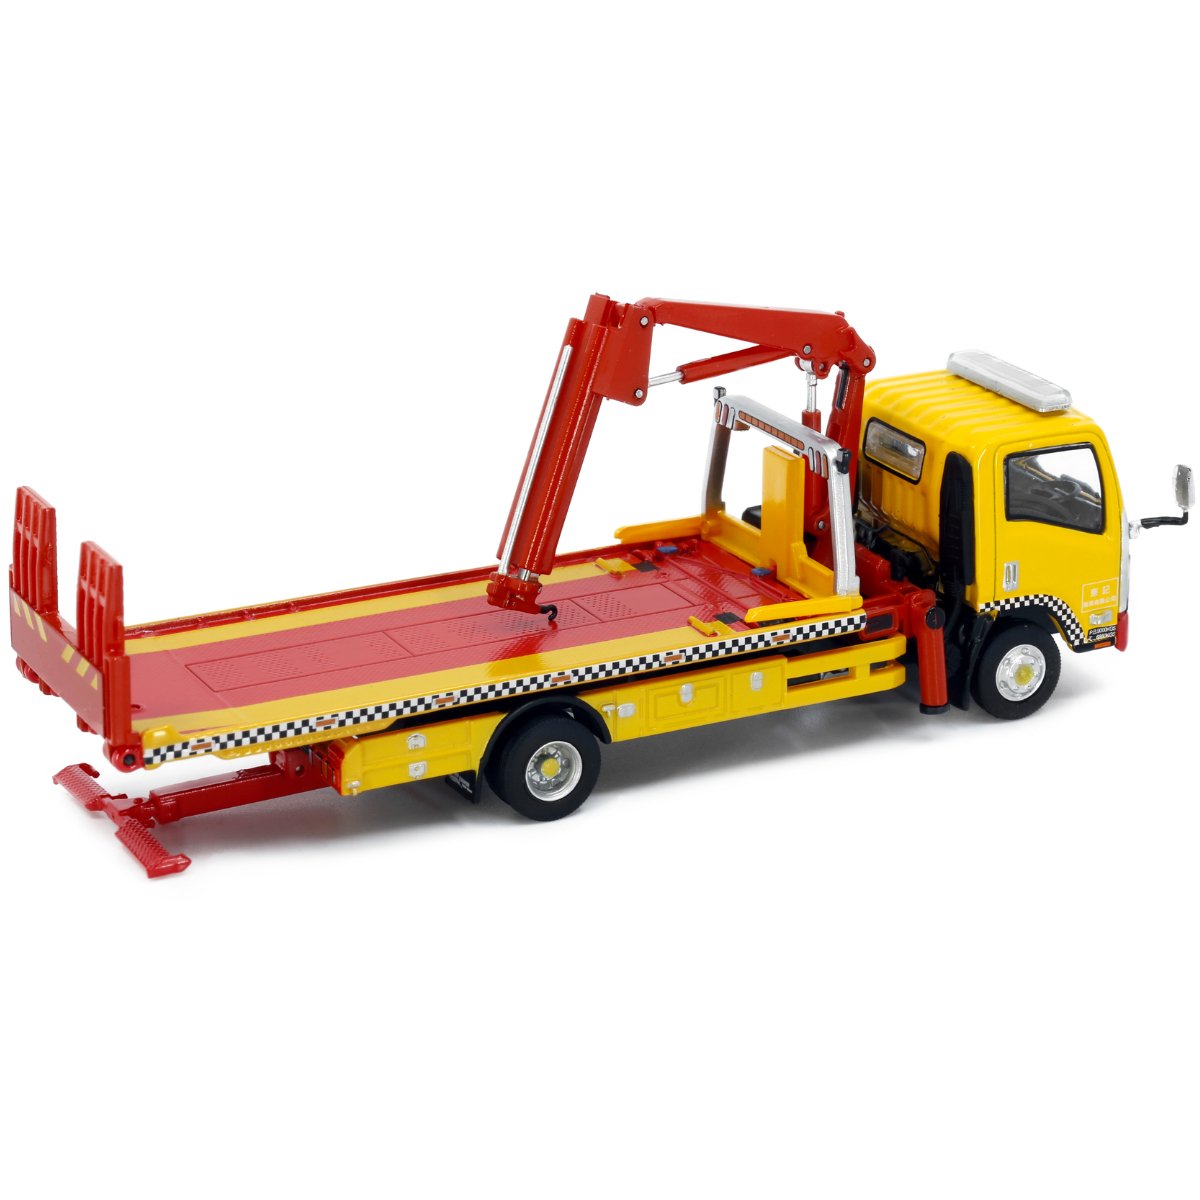 Tiny Models Isuzu N Series Macau Flatbed Tow Truck Yellow (1:64 Scale) - Phillips Hobbies